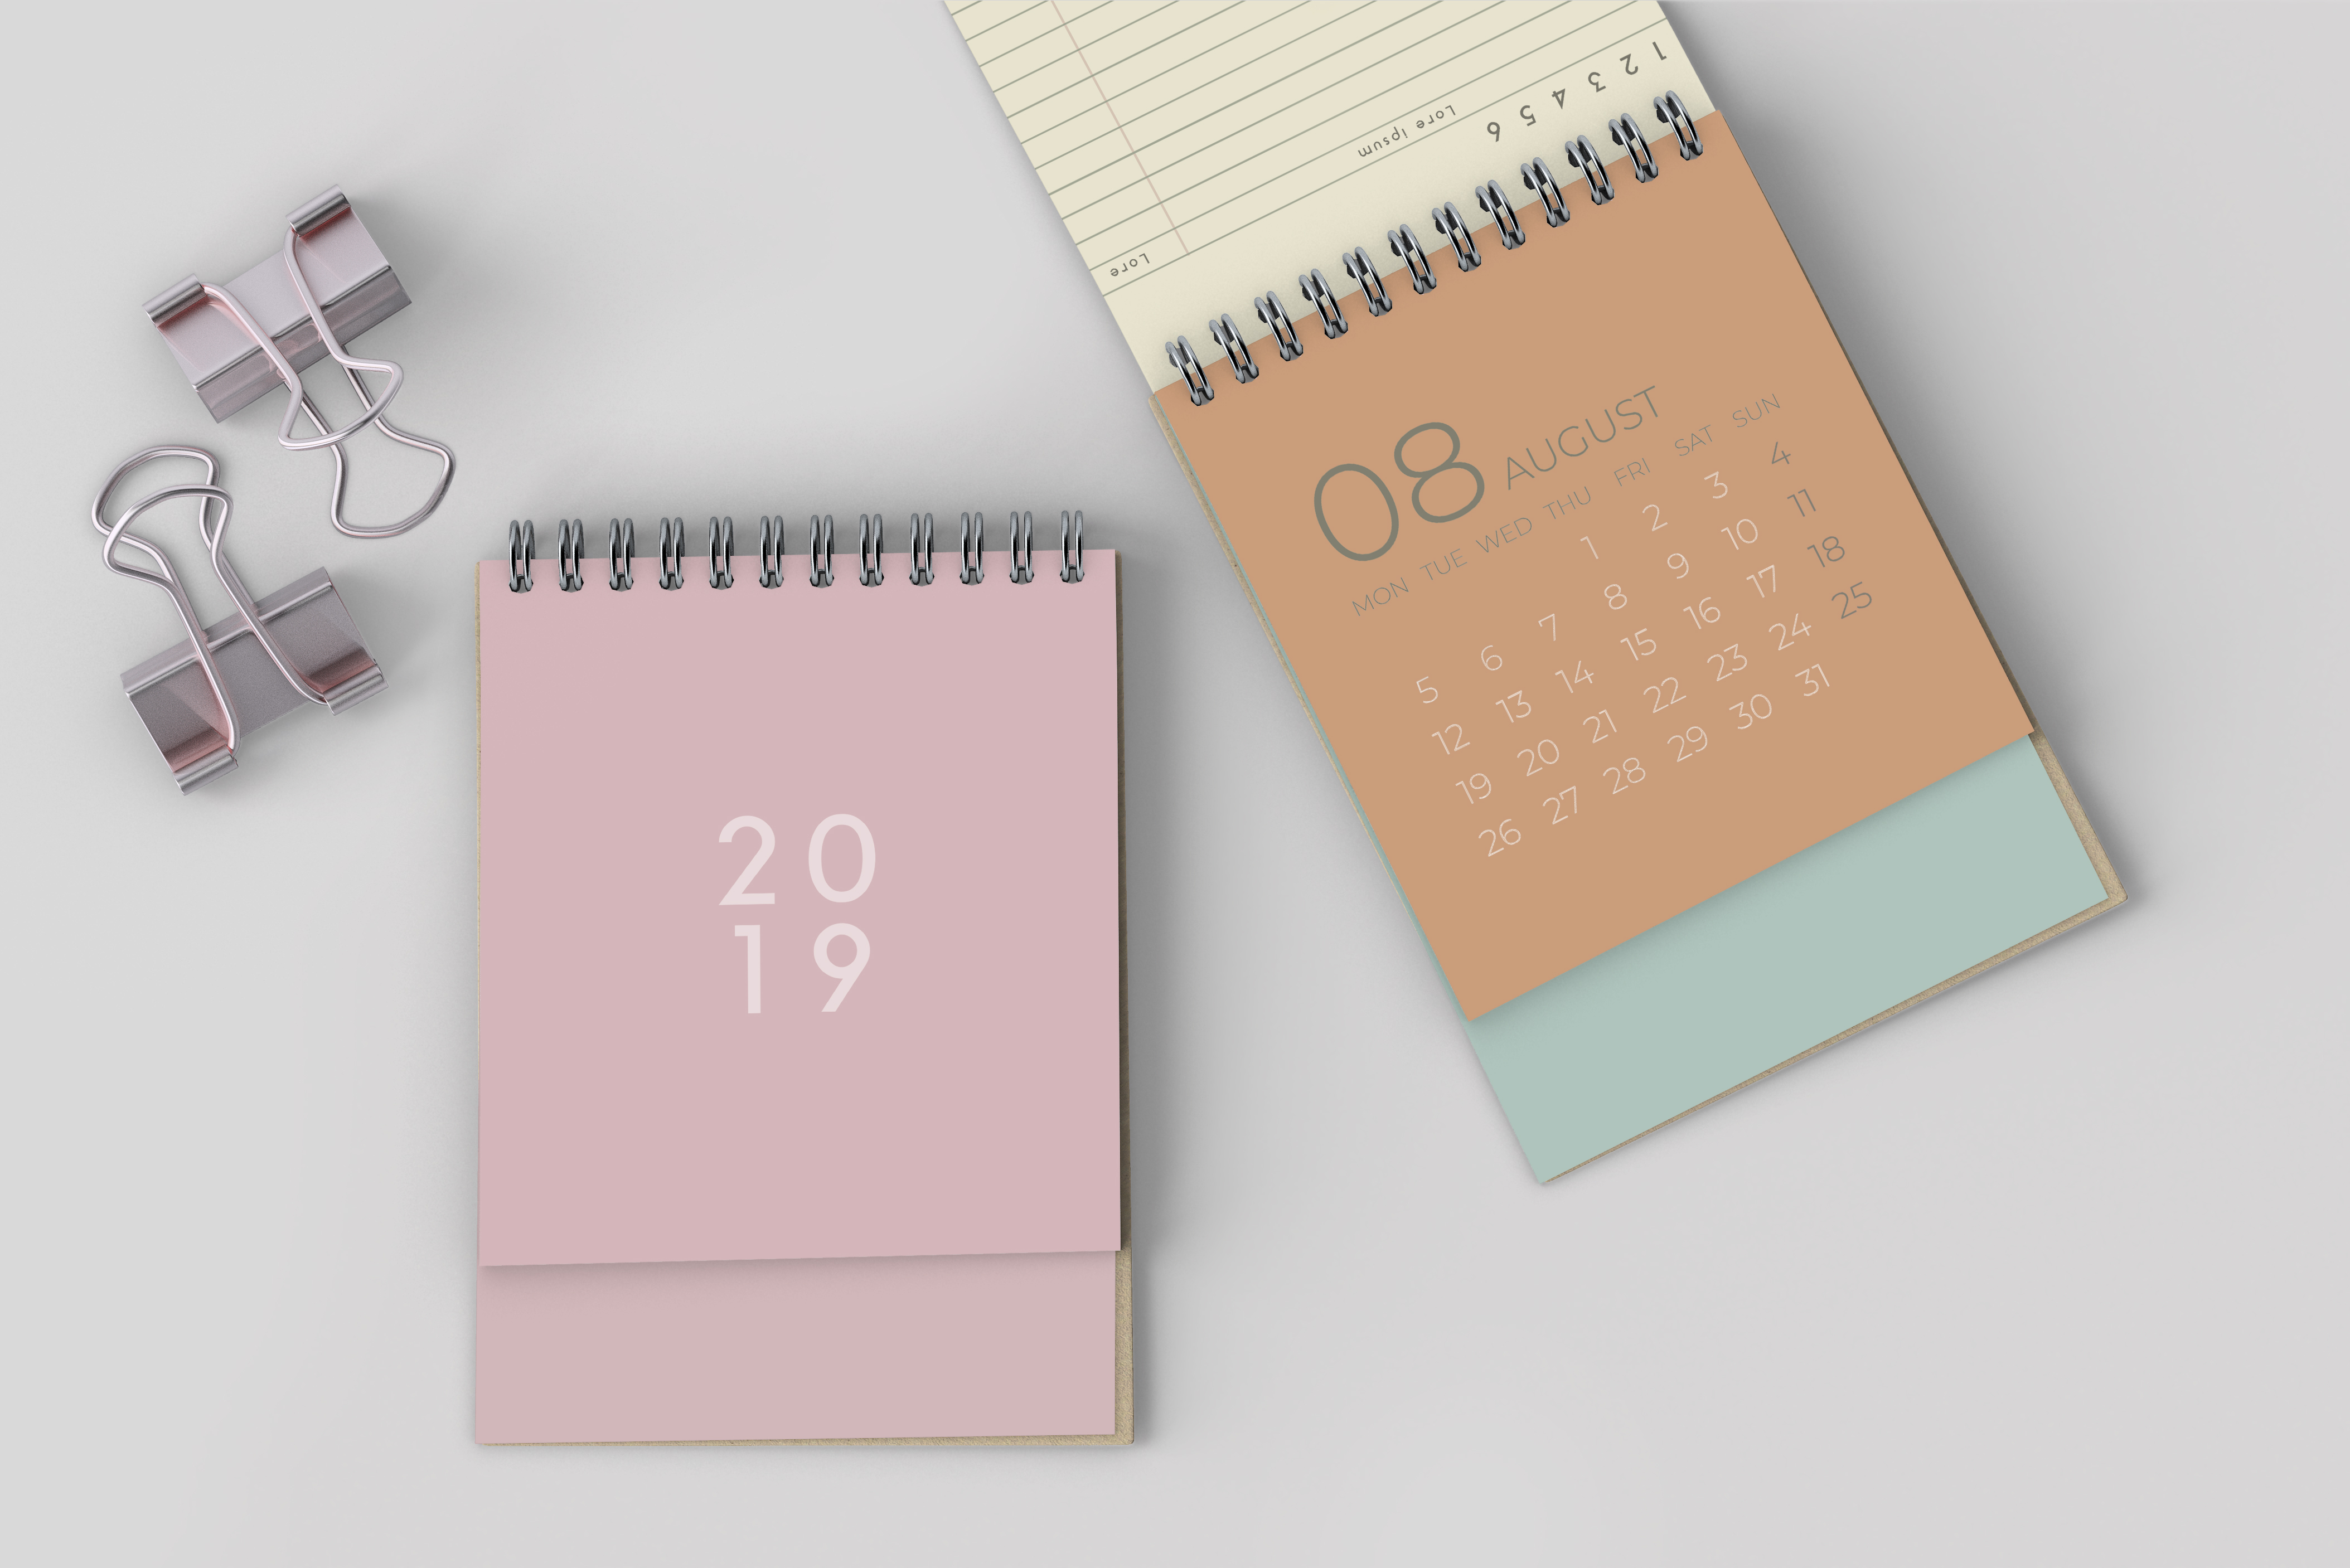 Tahun Baru Segera Tiba, Segera Pesan Jasa Desain Kalender 2020